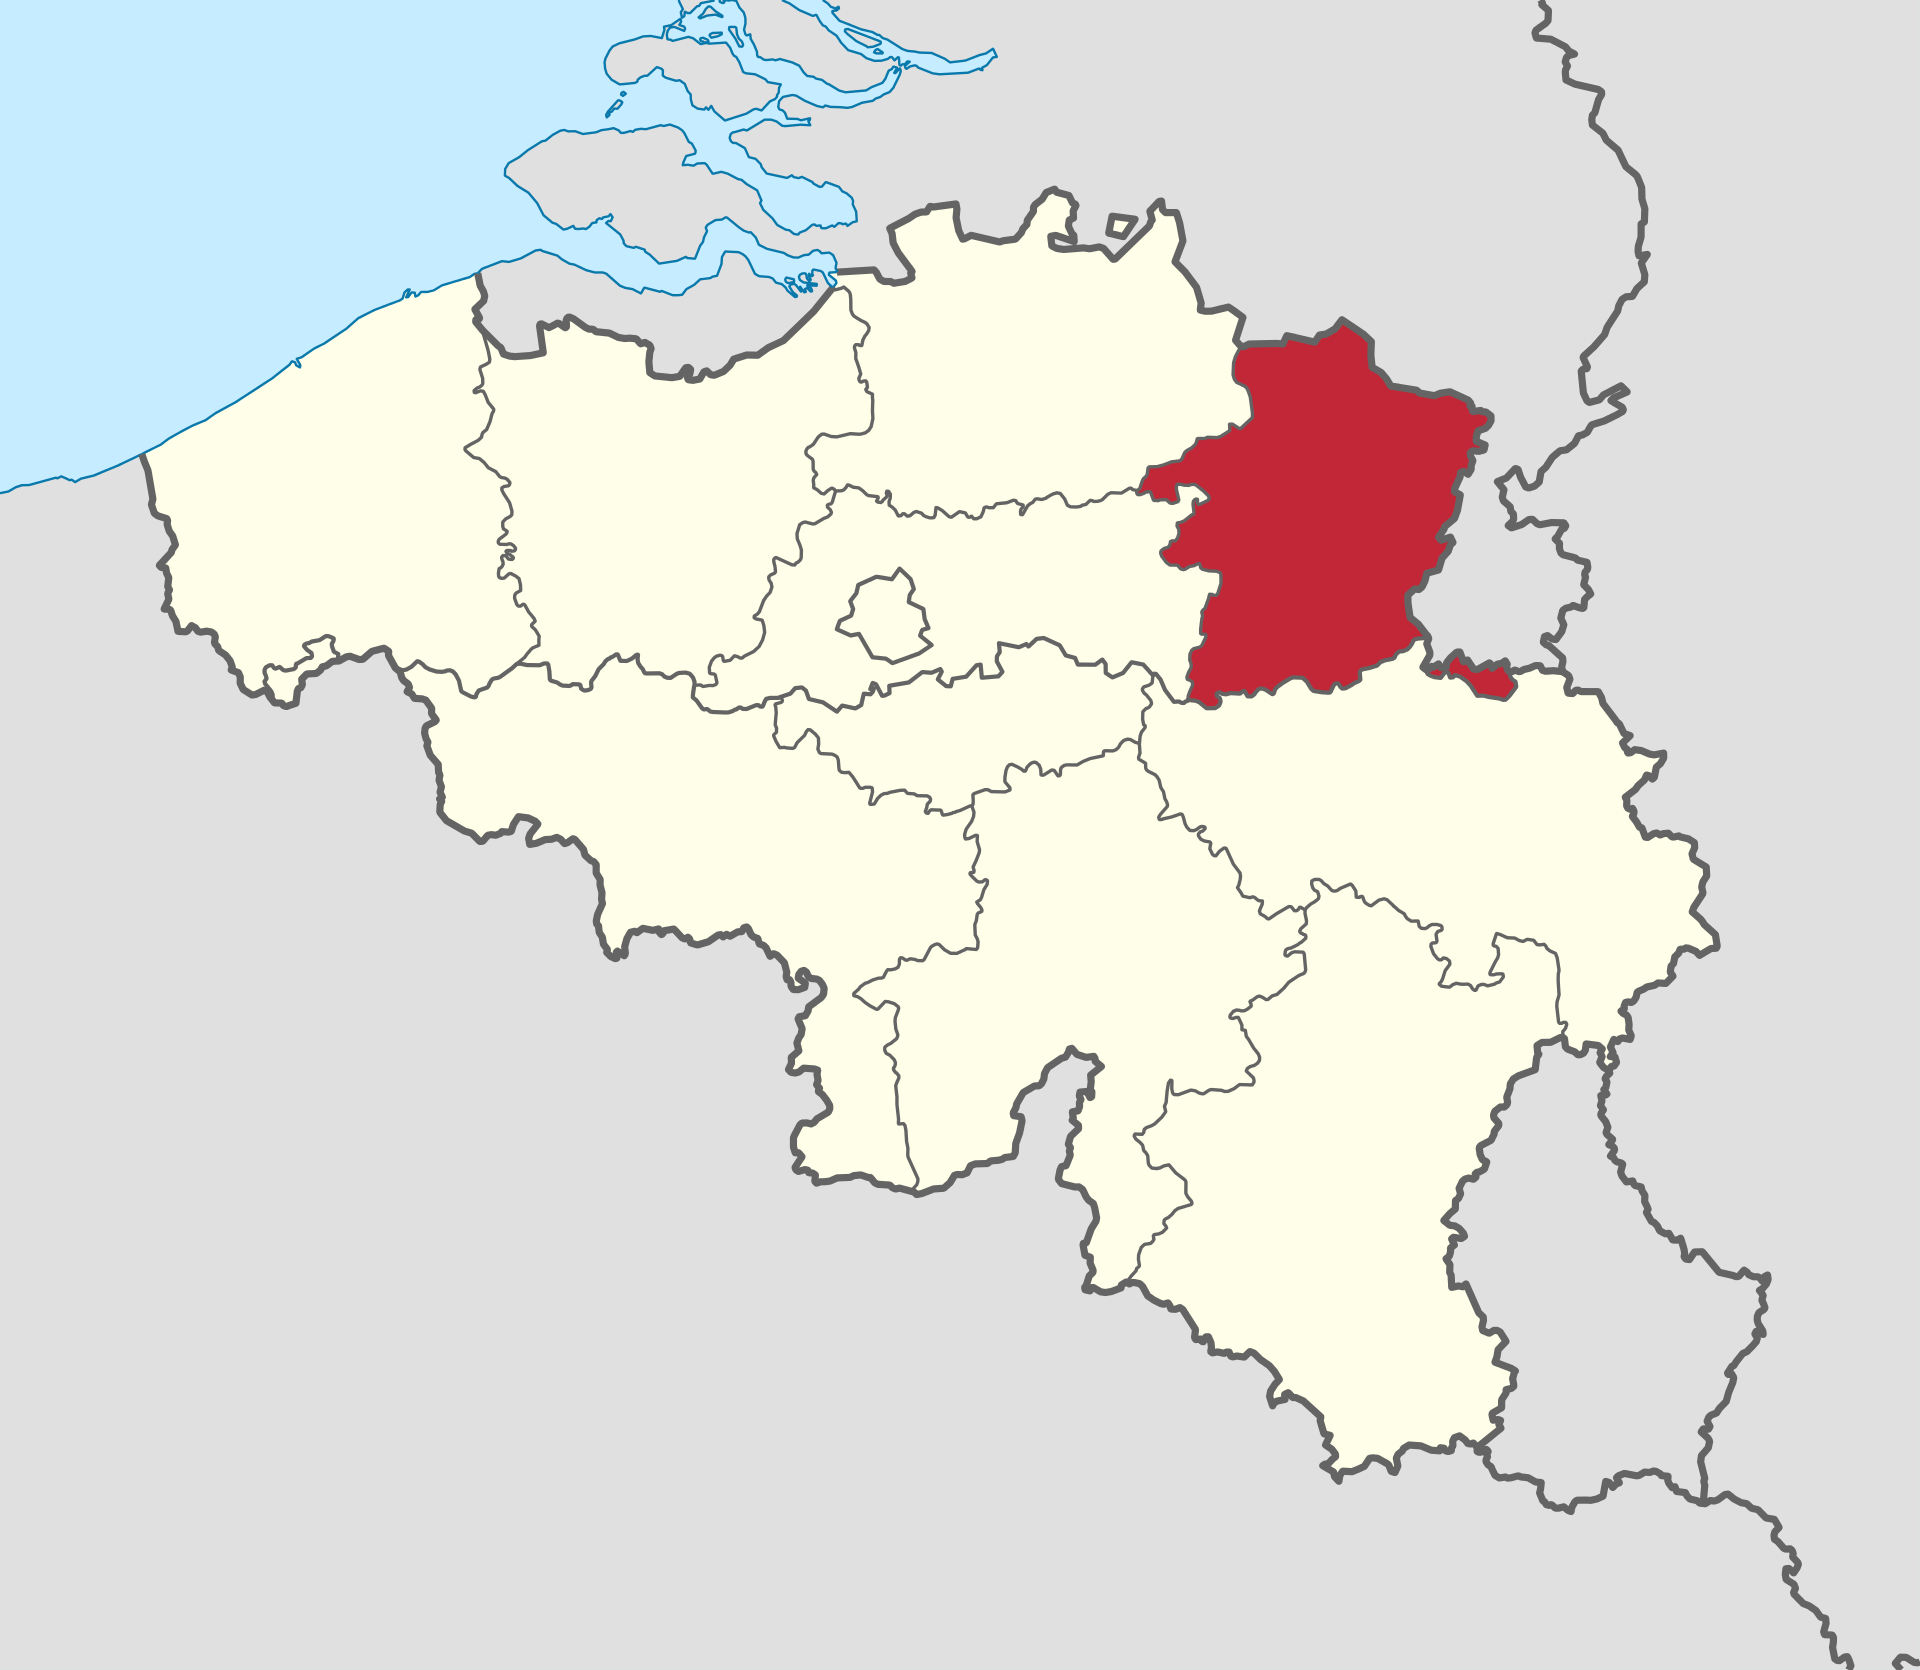 Army Storage Urbex location or around the region Limburg (Vlaams Gewest), Belgium